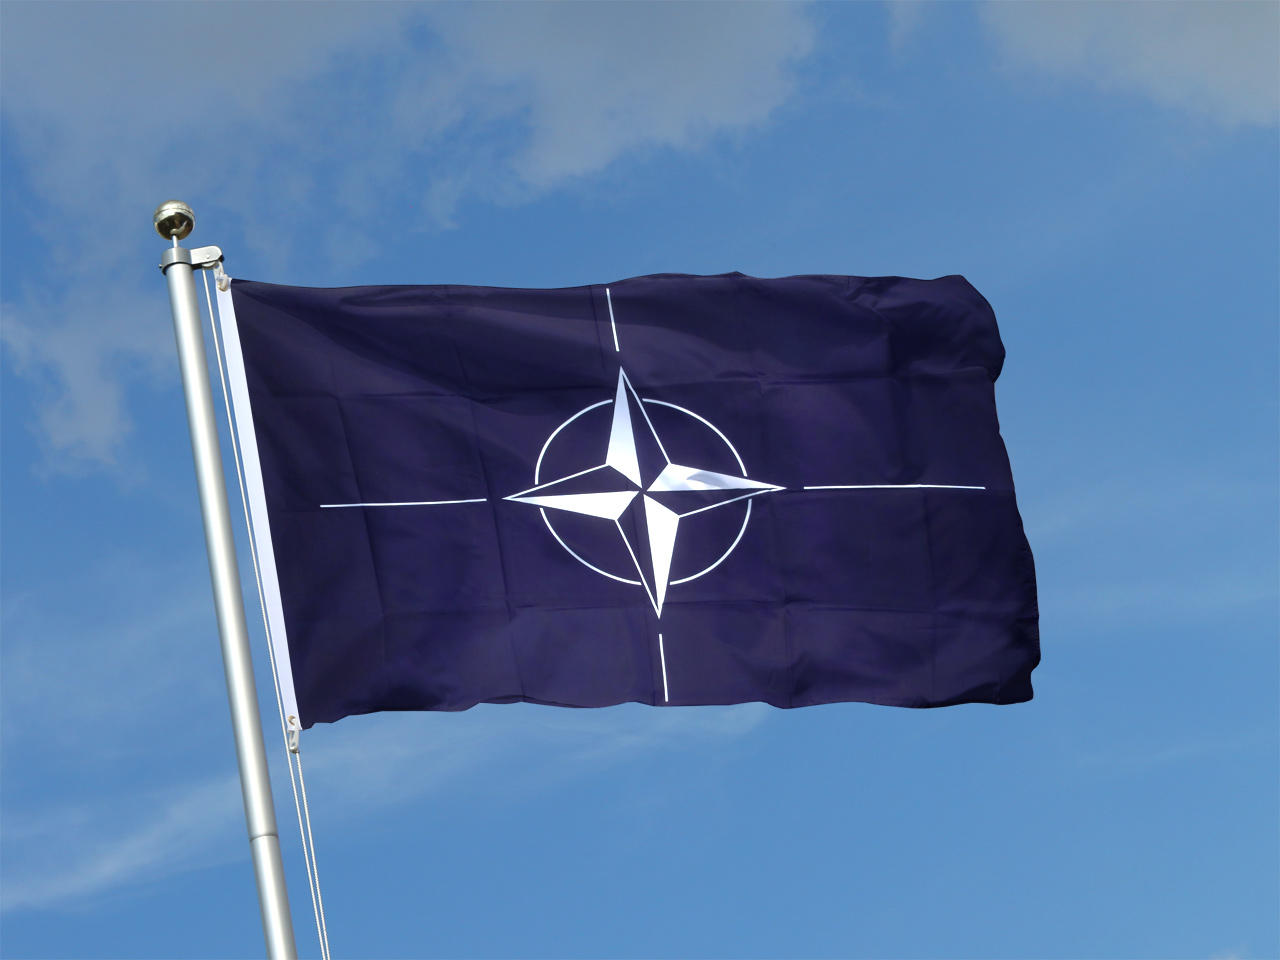 NATO Flagge Fahne Hißflagge Hissfahne 150 cm x 90 cm